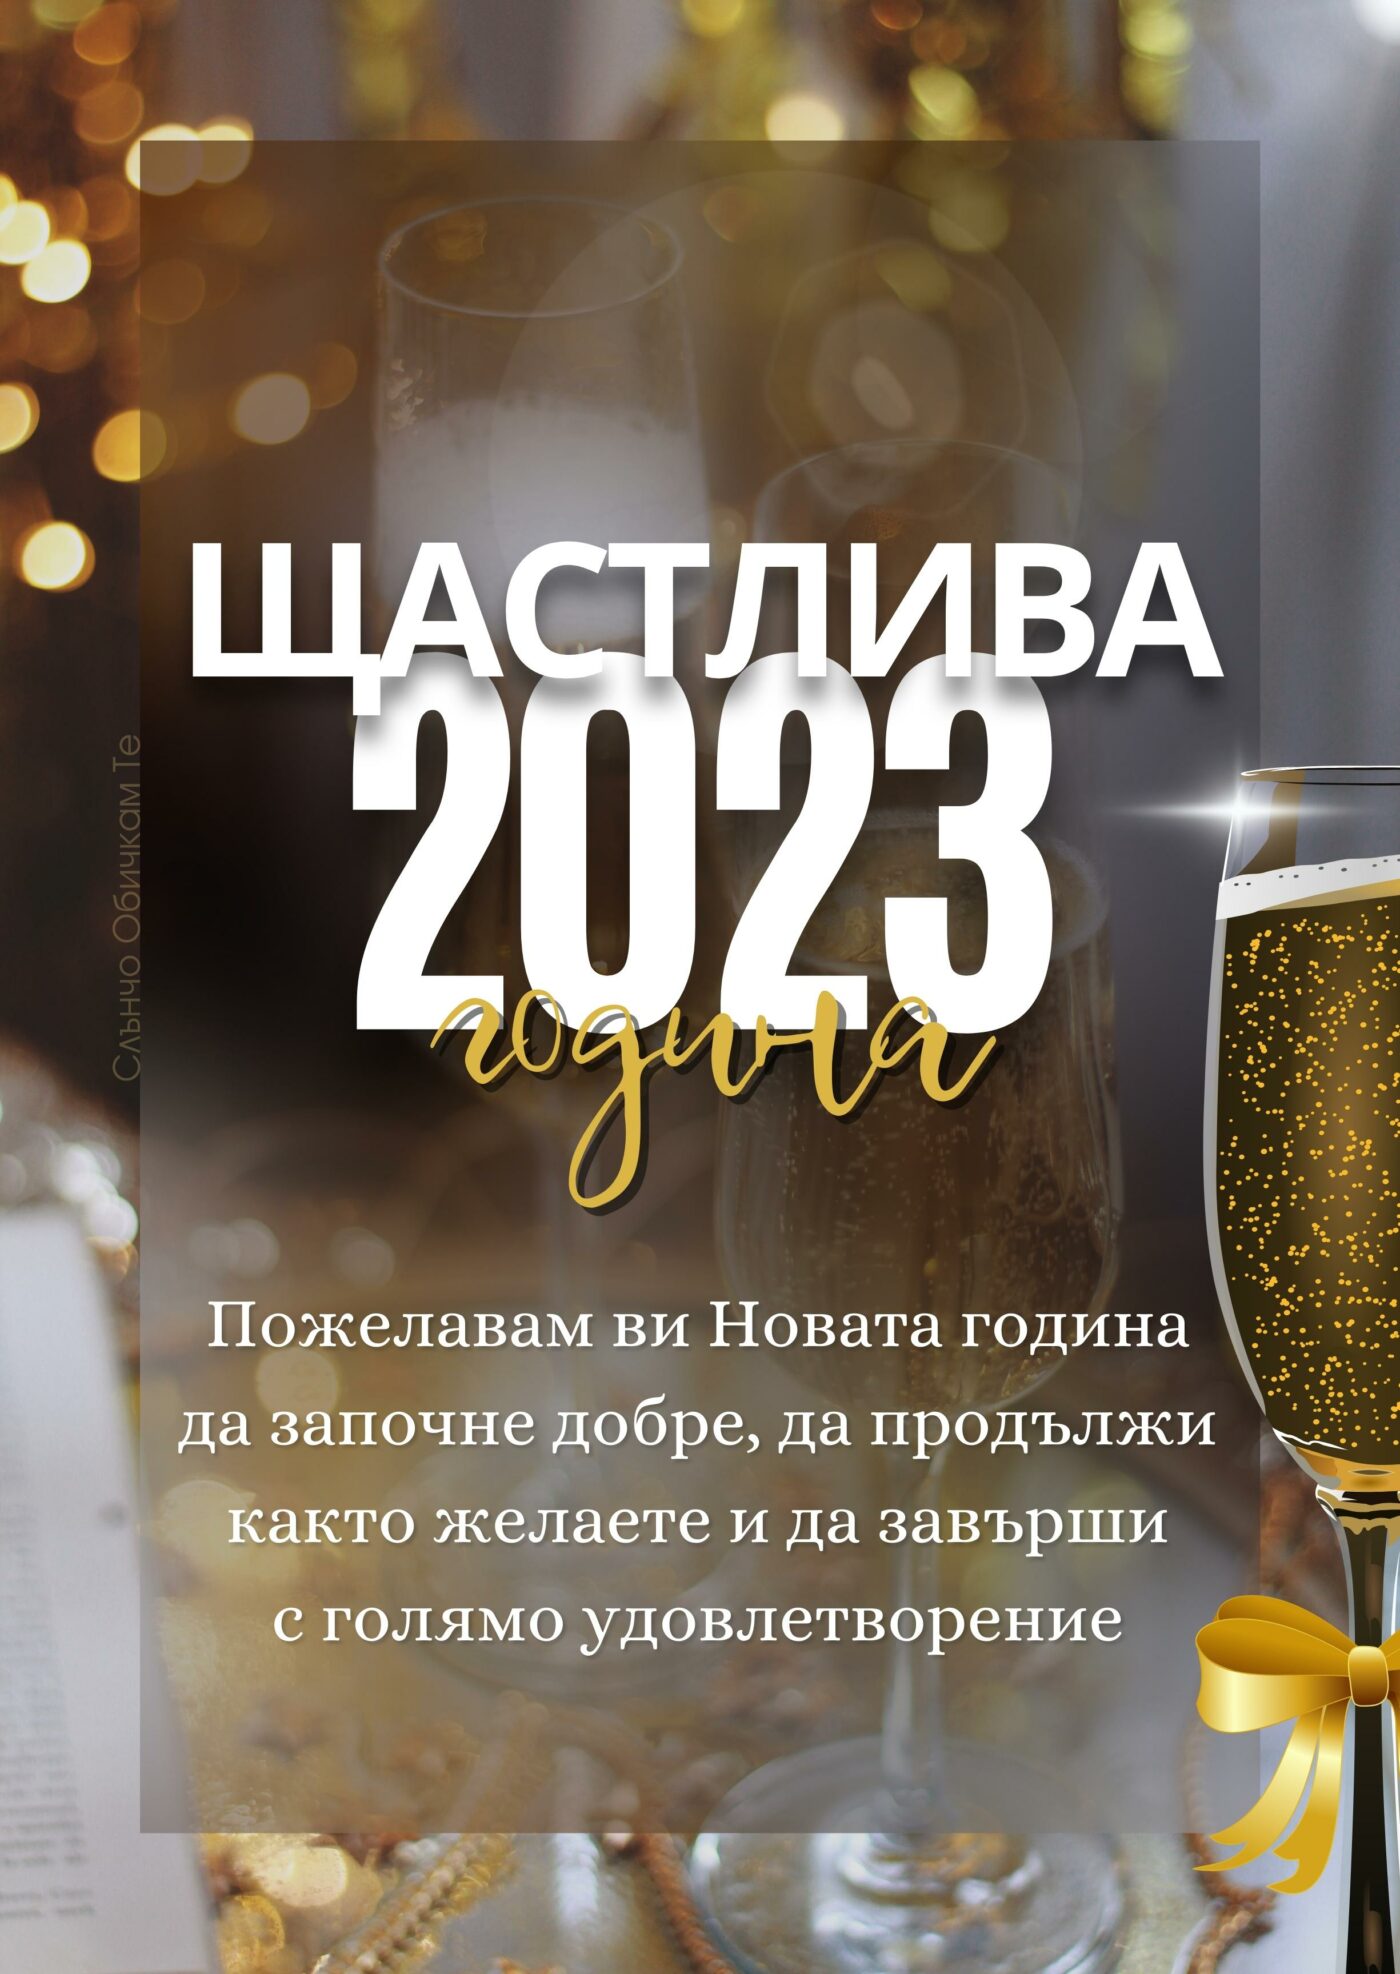 Щастлива Нова 2023 година - Новогодишни картички, Нова година 2023, честита нова година, картички за нова година 2023, пожелания за нова година, слънчо обичкам те